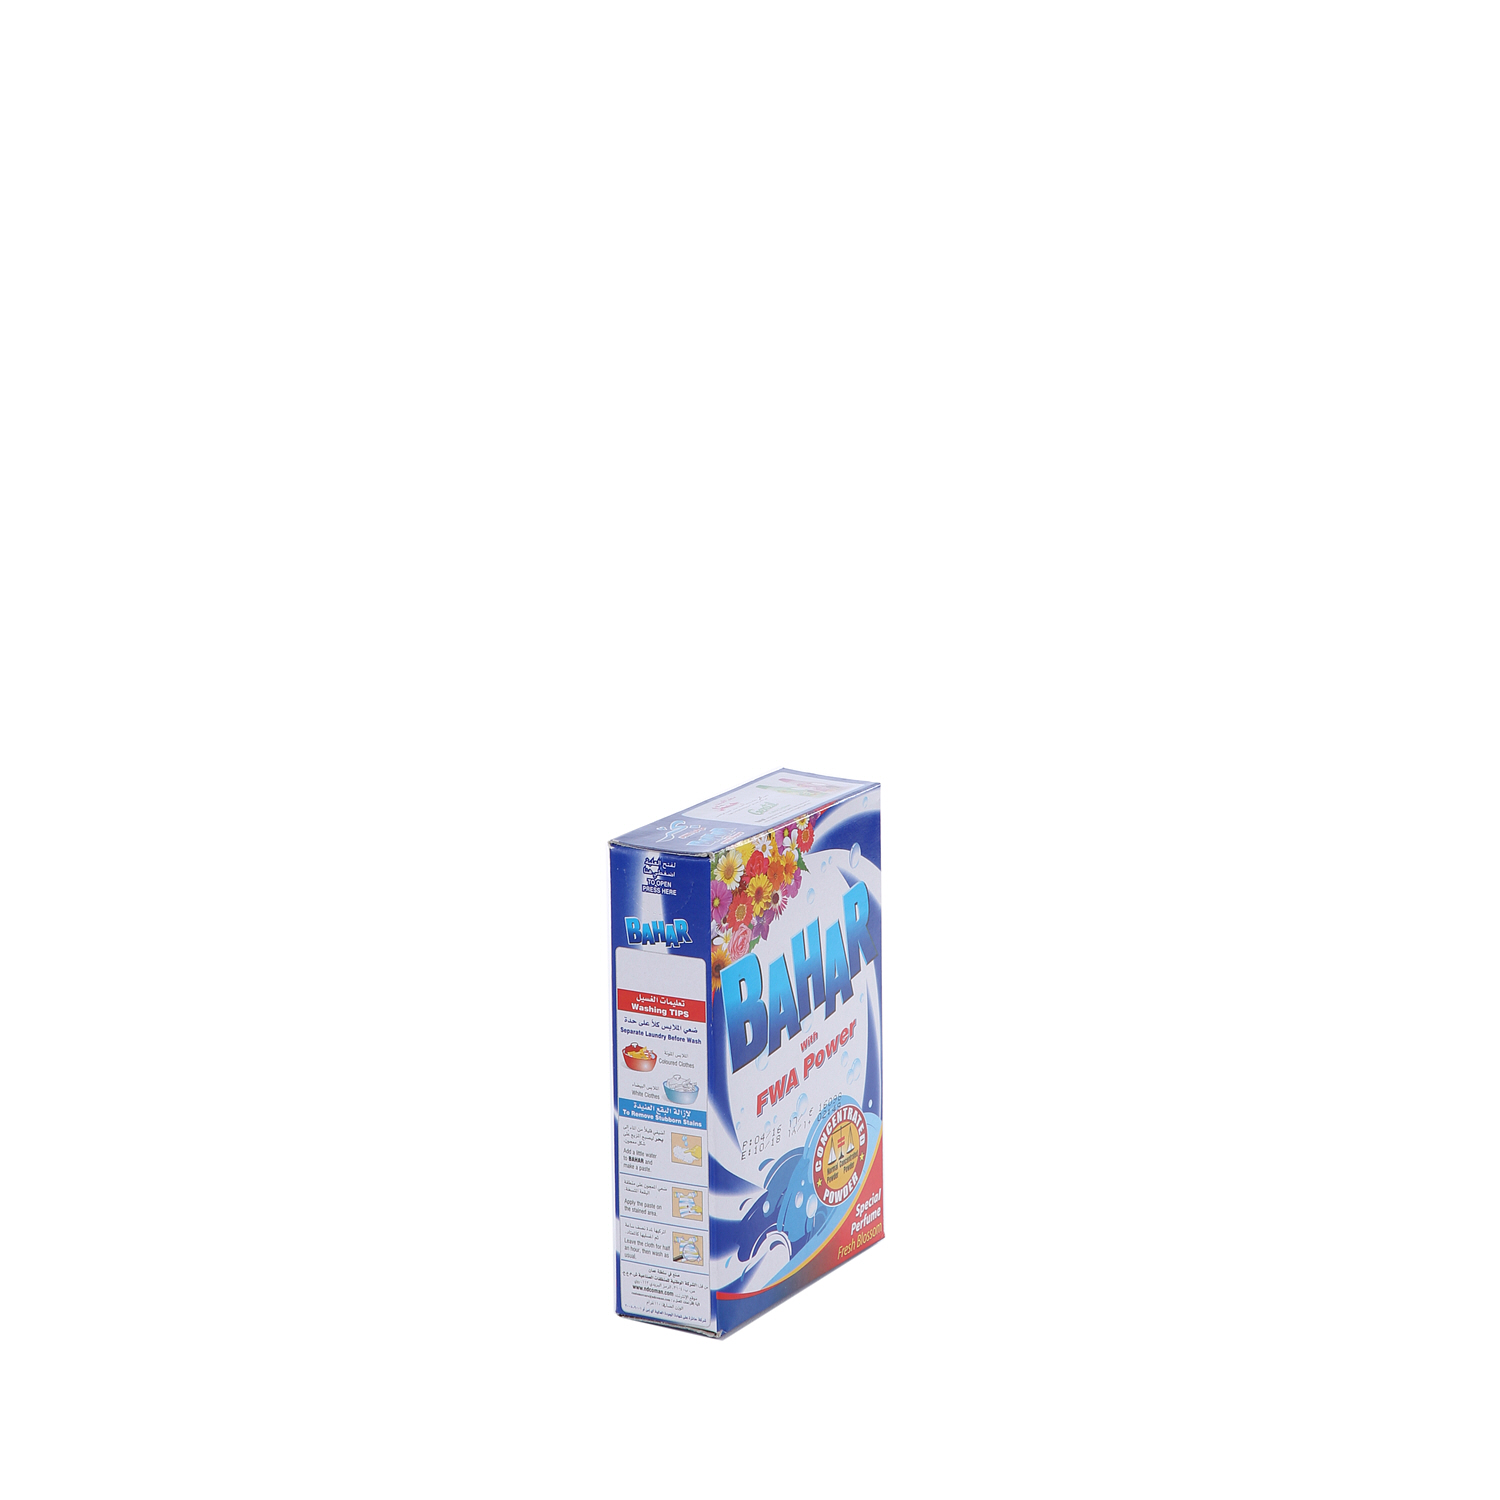 Bahar Detergent Powder Fresh Blossom 120 g